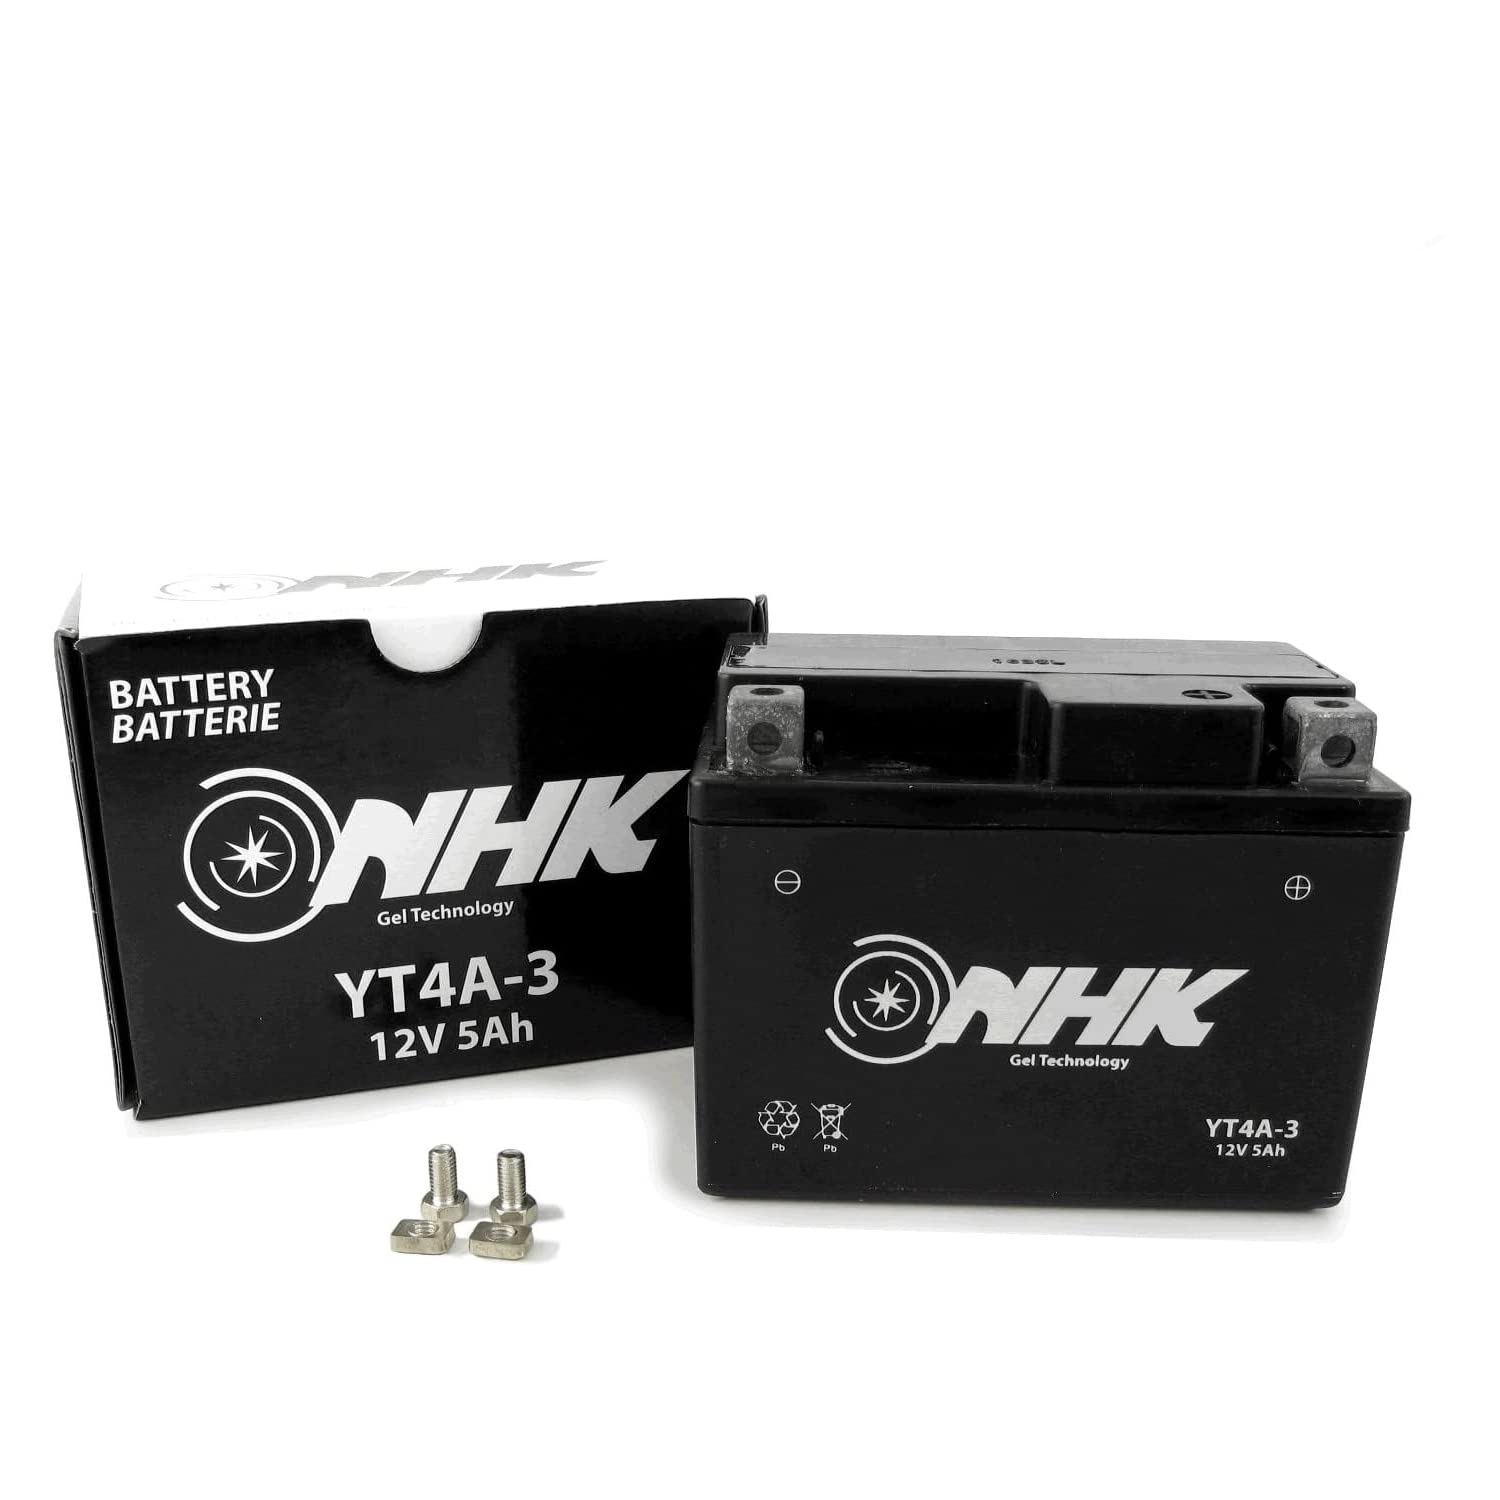 Wartungsfreie Gel Batterie 5Ah kompatibel mit Yamaha Jog 50 (YT4A-3) von Area Longboard